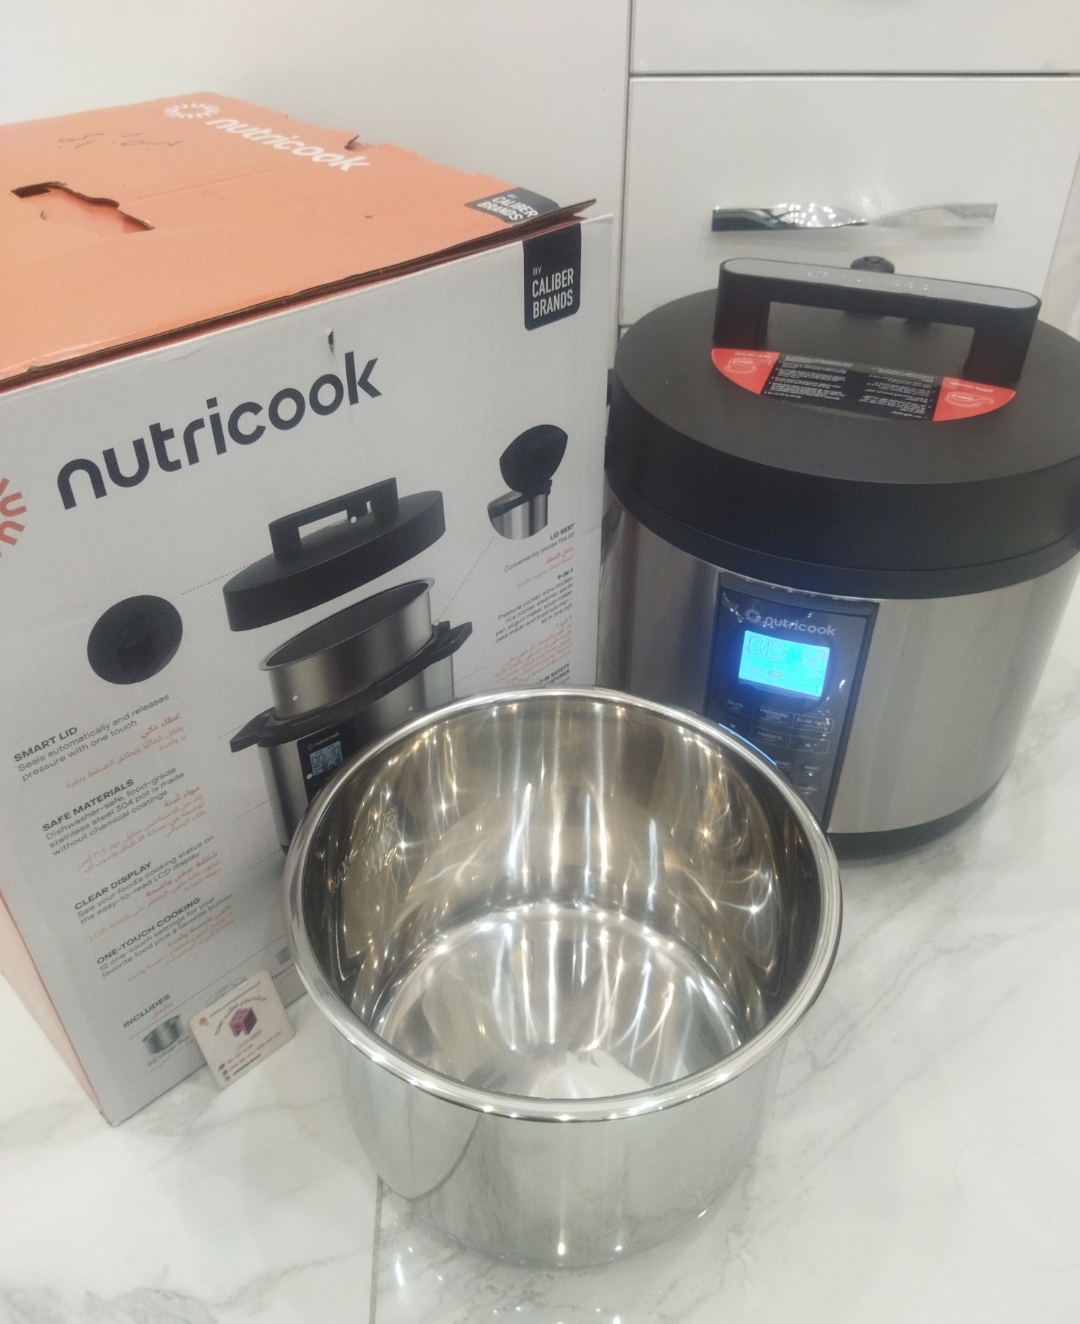  Nutricook multicooker 208p